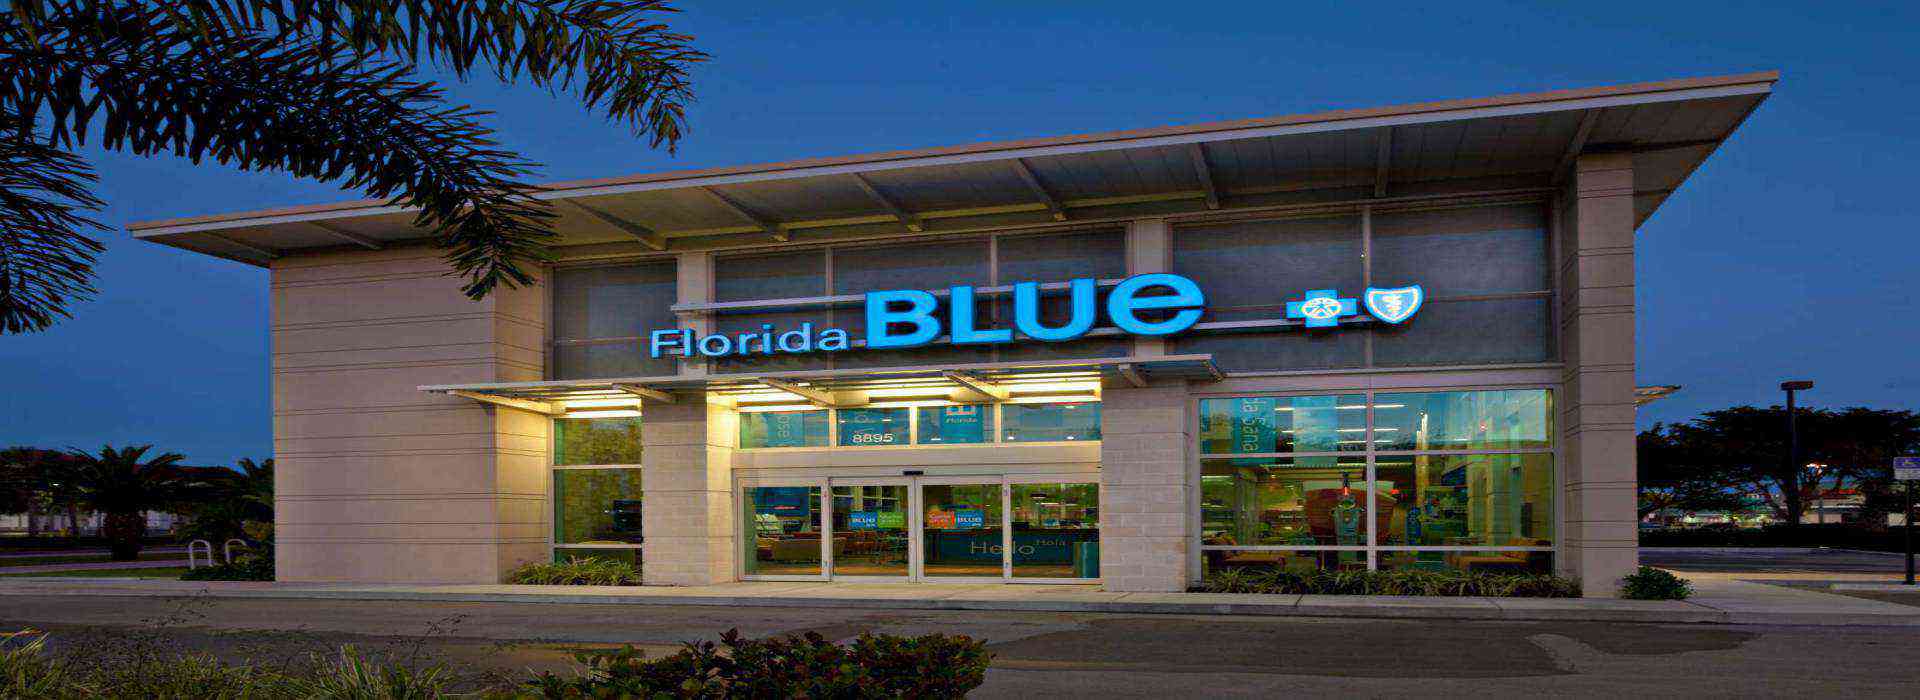 Cross Blue Shield Florida Customer 15